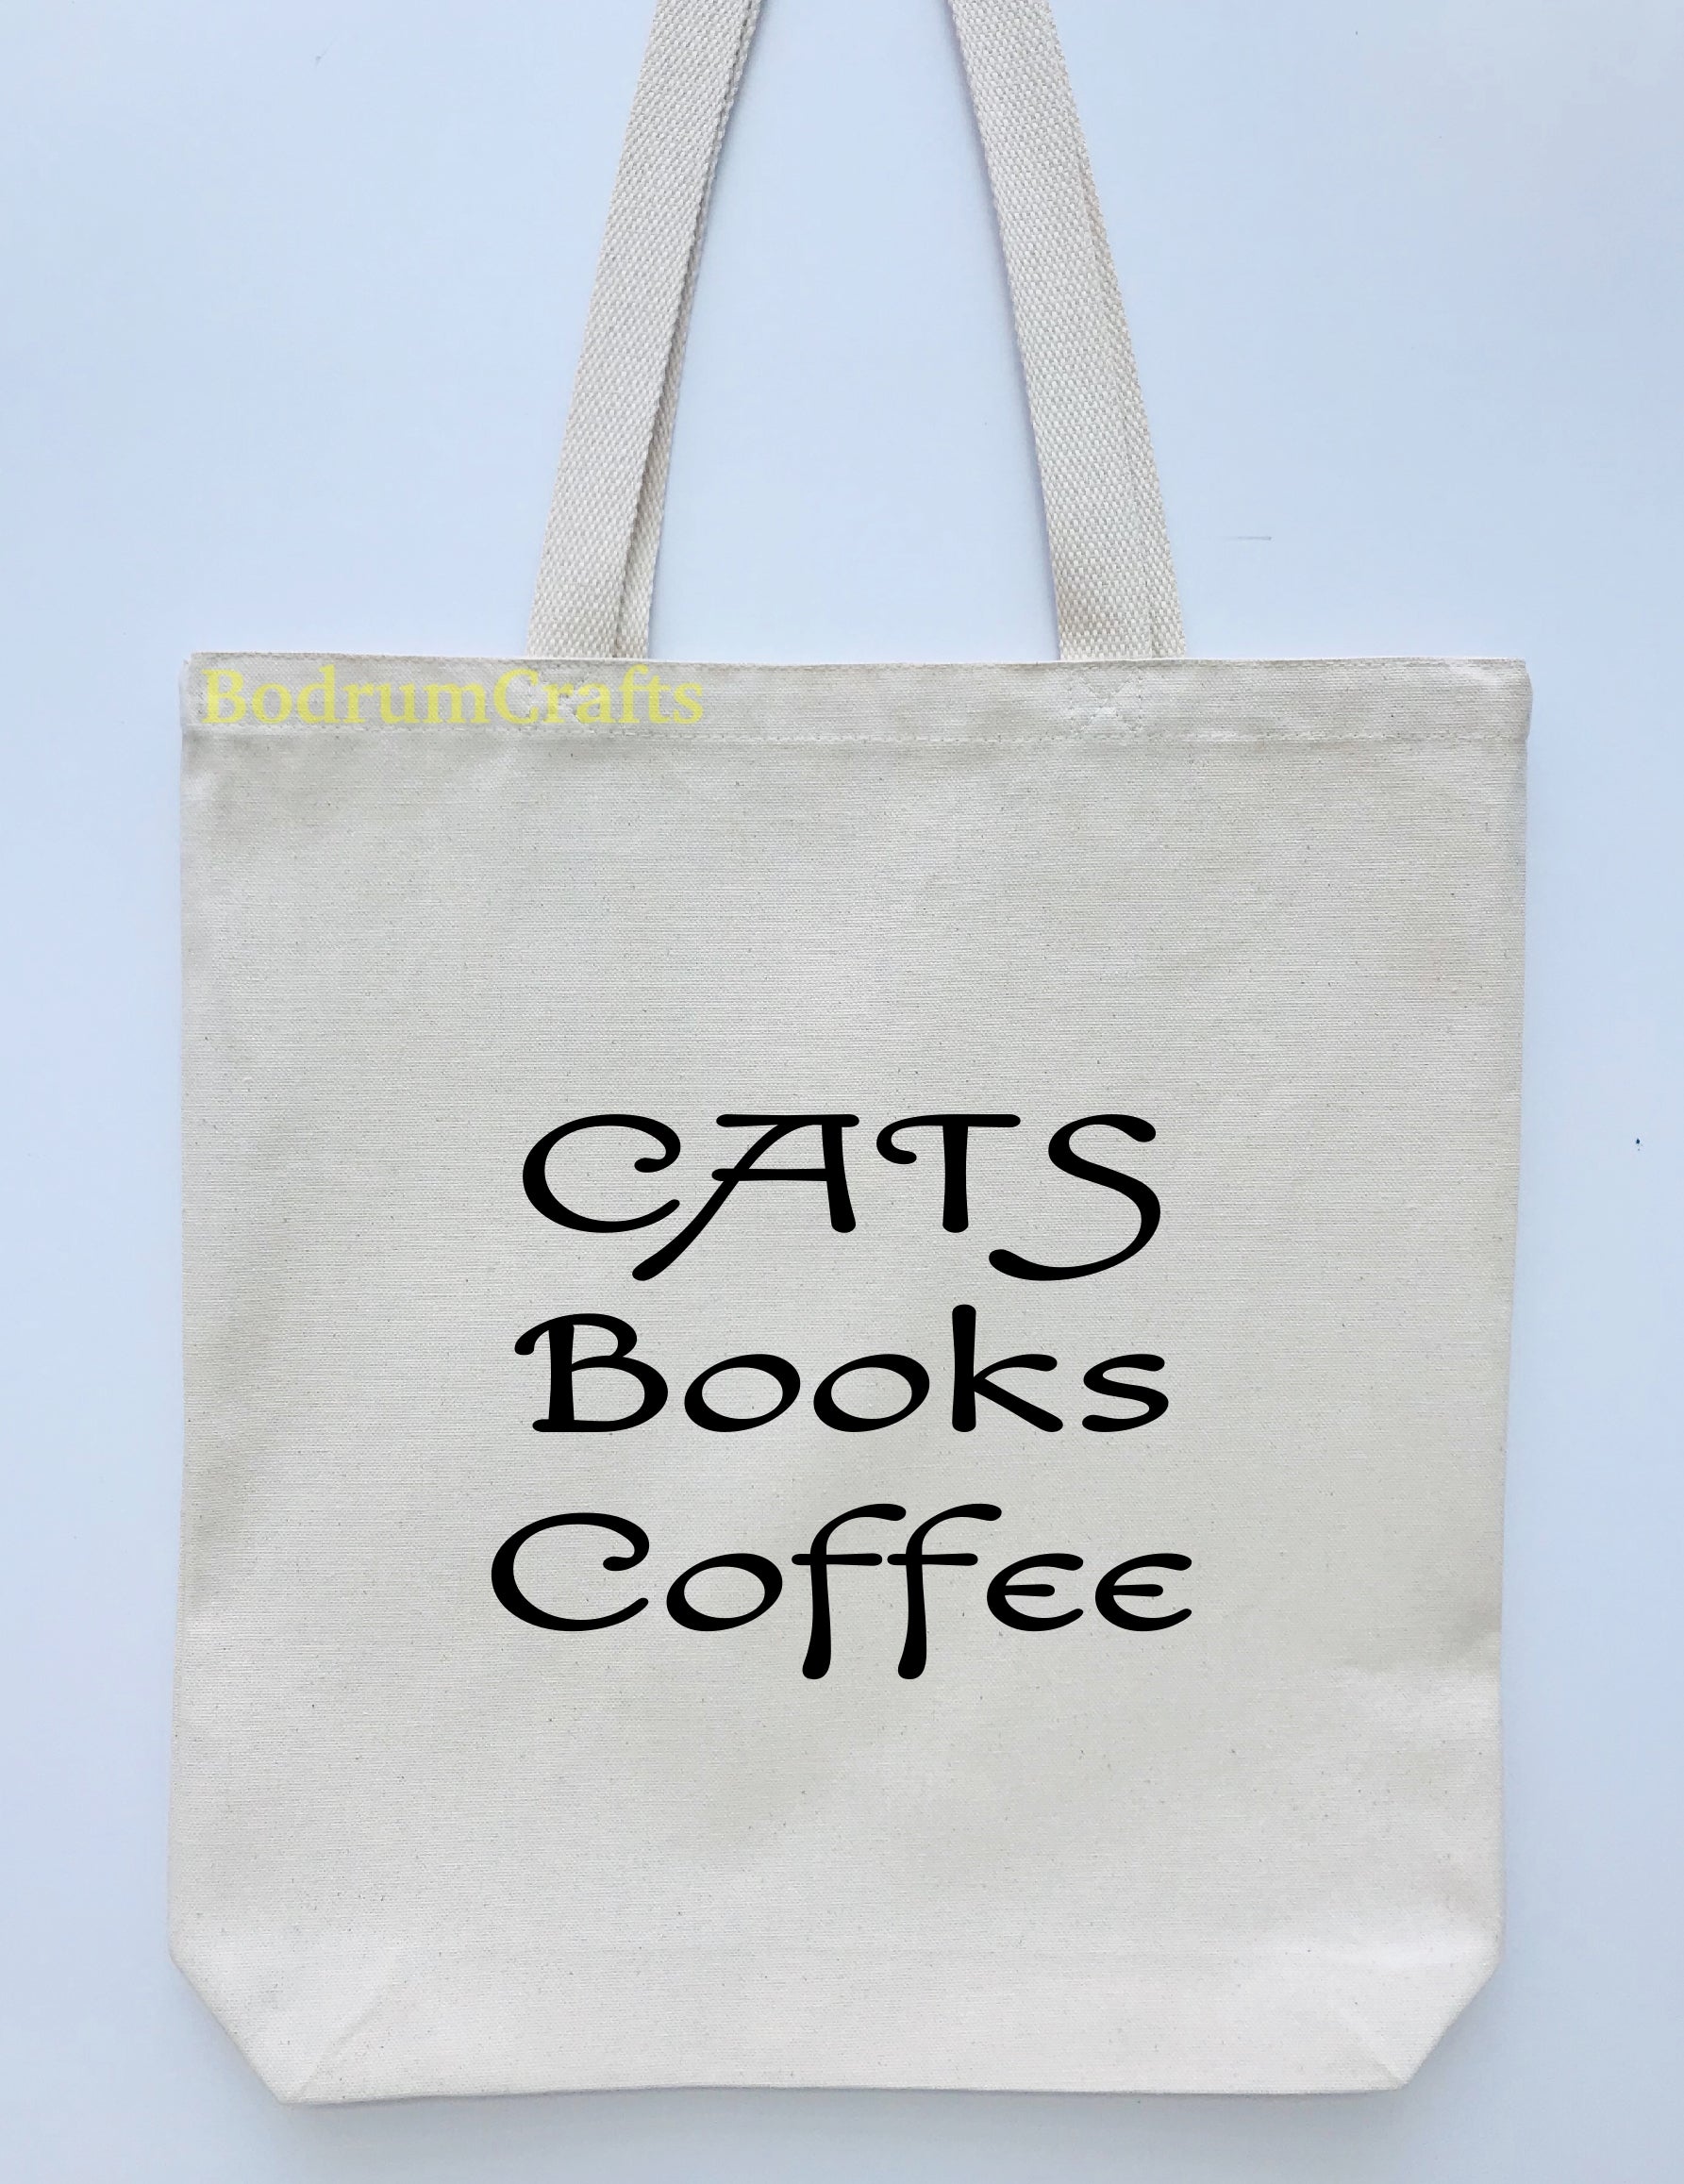 Coffee Design Printed Canvas Tote Bag, "Cats, Books, Coffee"